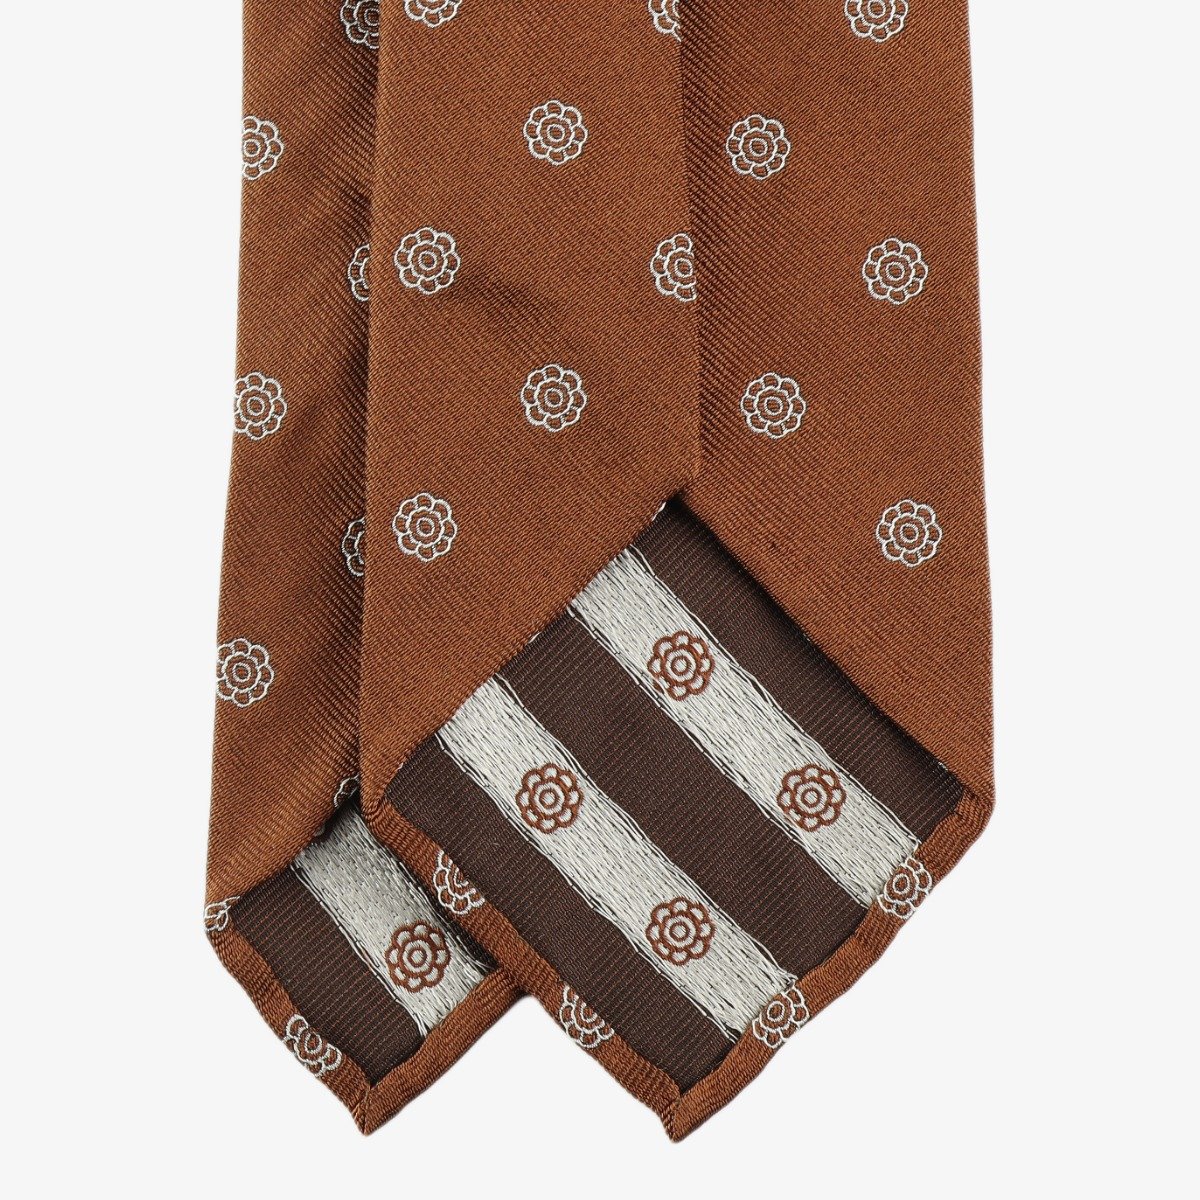 Shibumi Firenze copper silk tie with white floral pattern